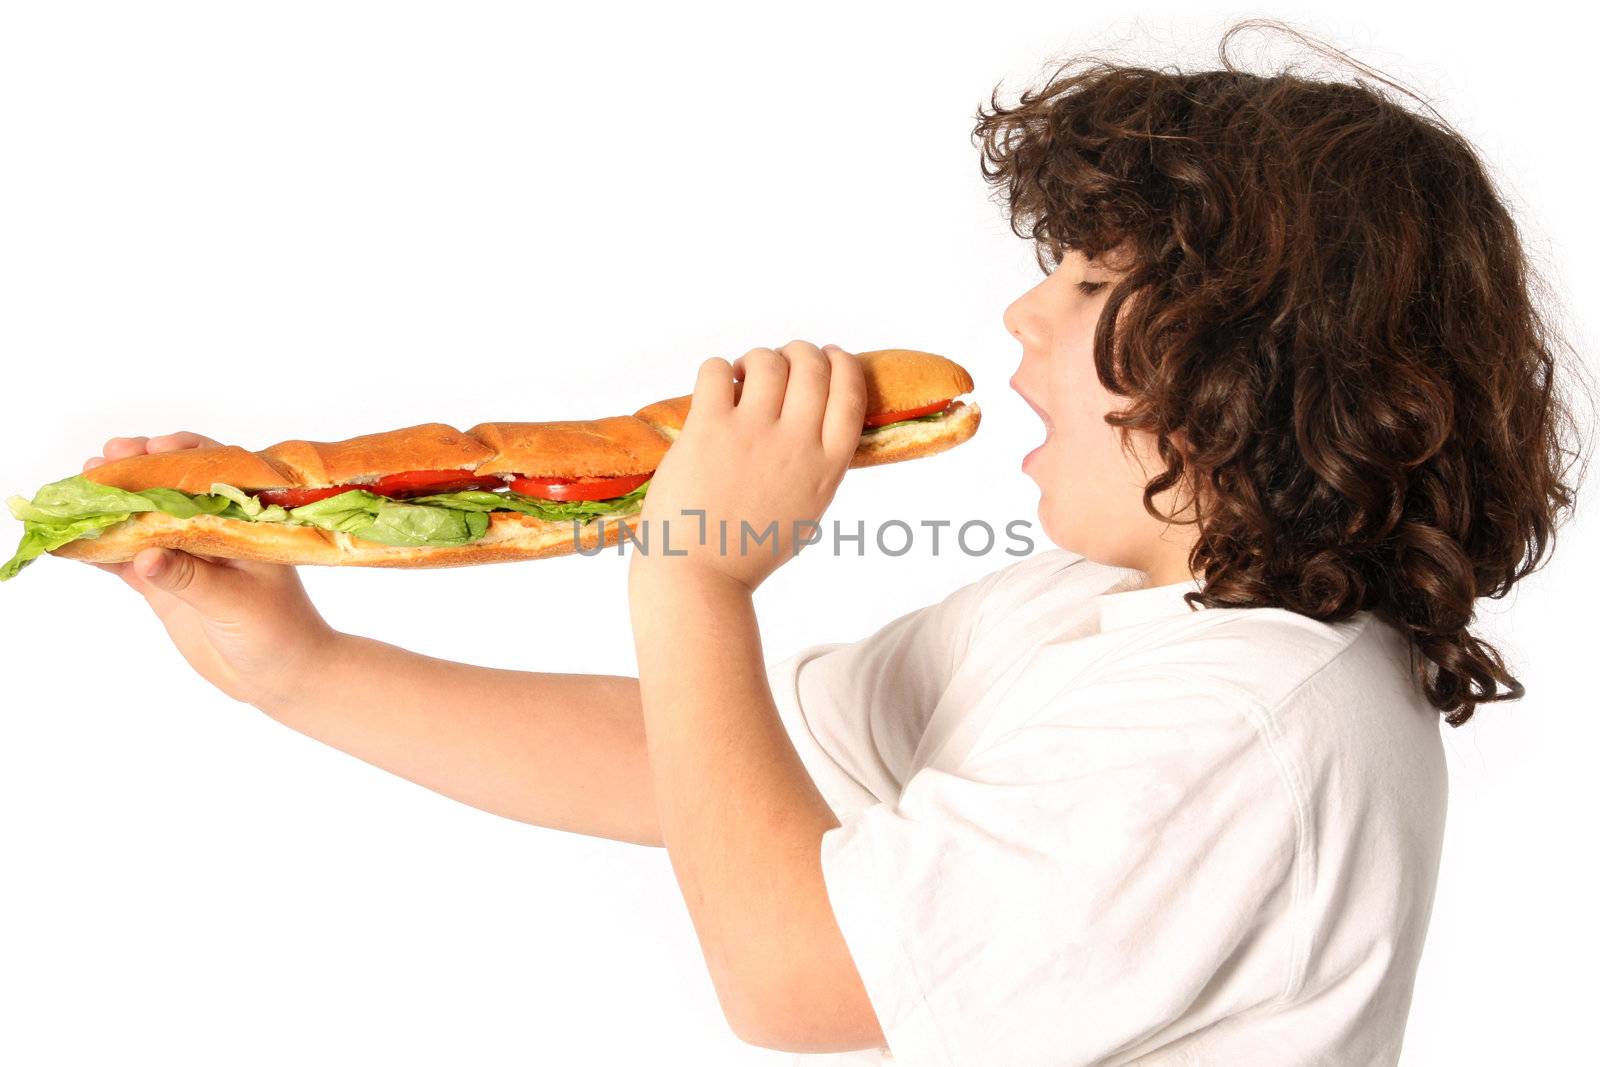 boy eating large sandwich on white background